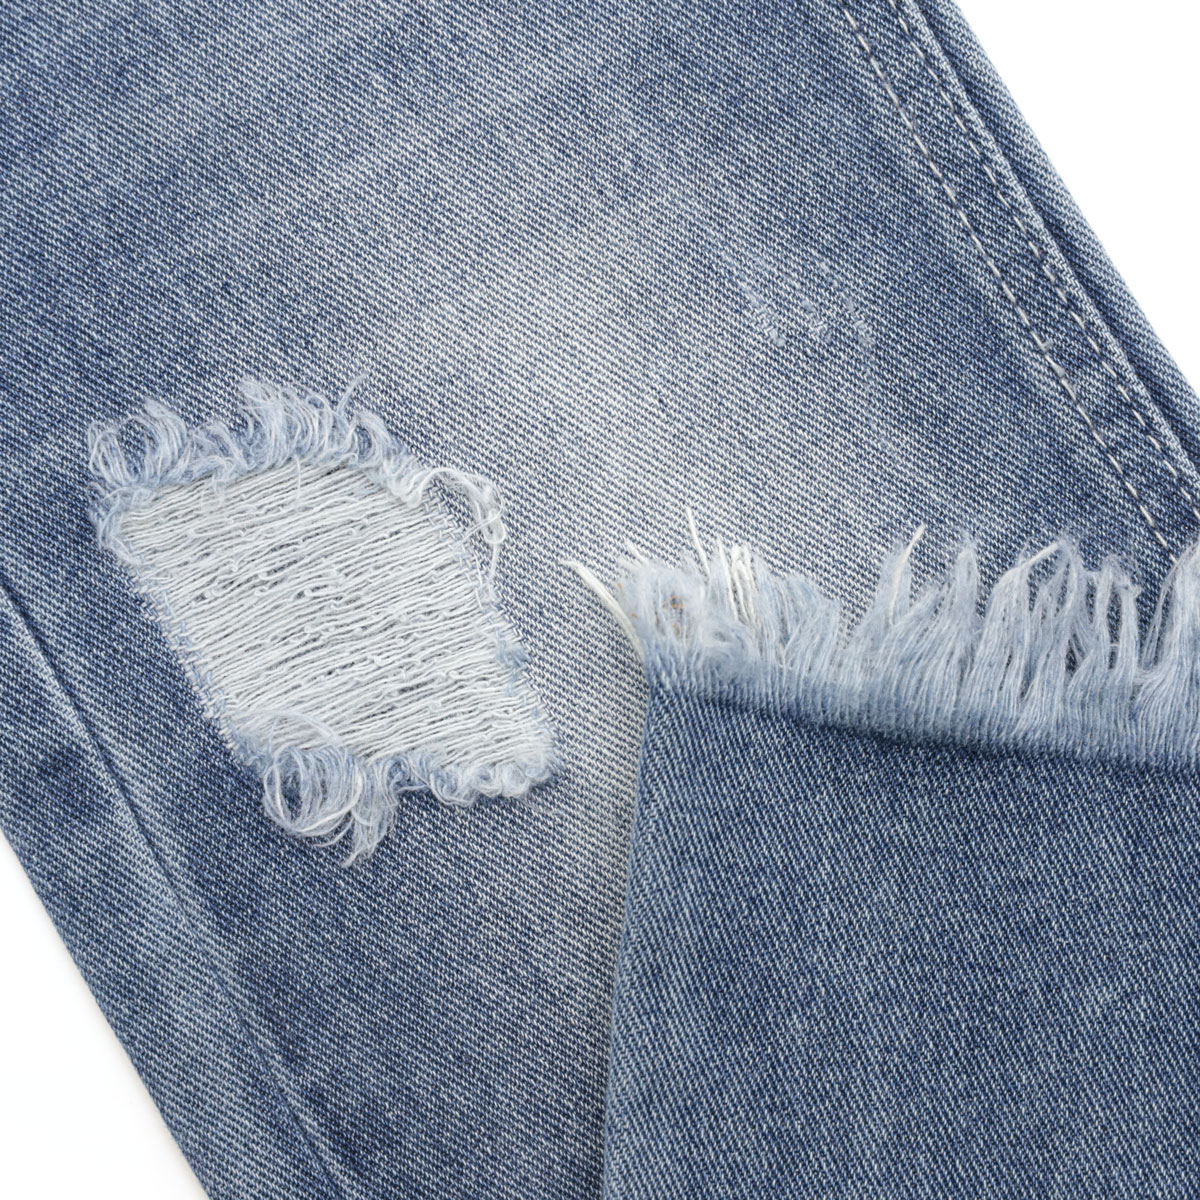 who makes denim jeans？-2021 hight quality denim jeans company 1